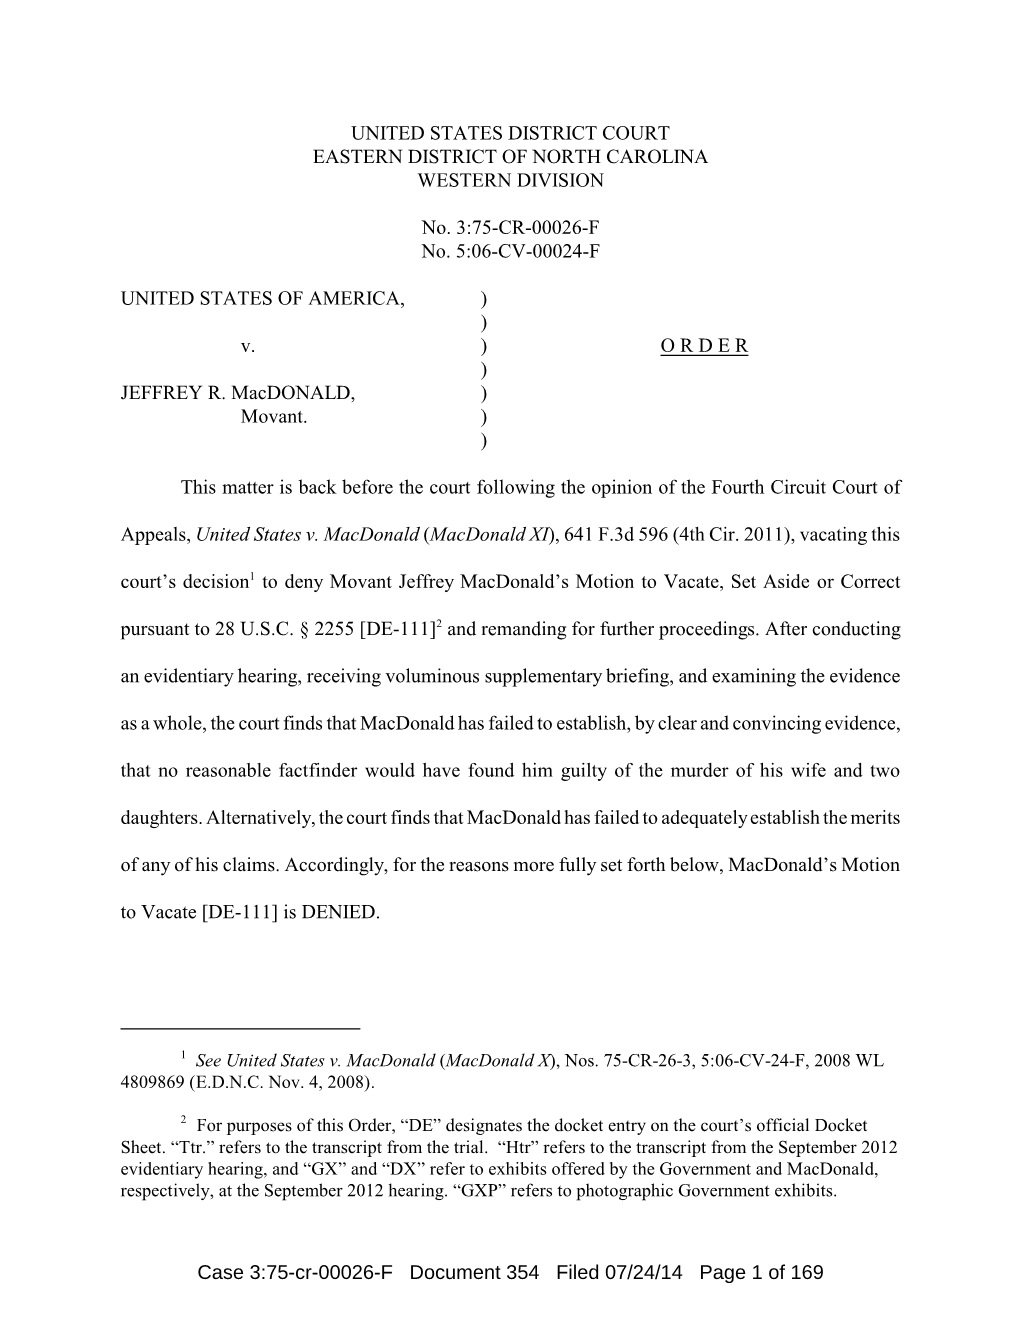 July 24, 2014: Judge Fox's Order Denying Jeffrey Macdonald's